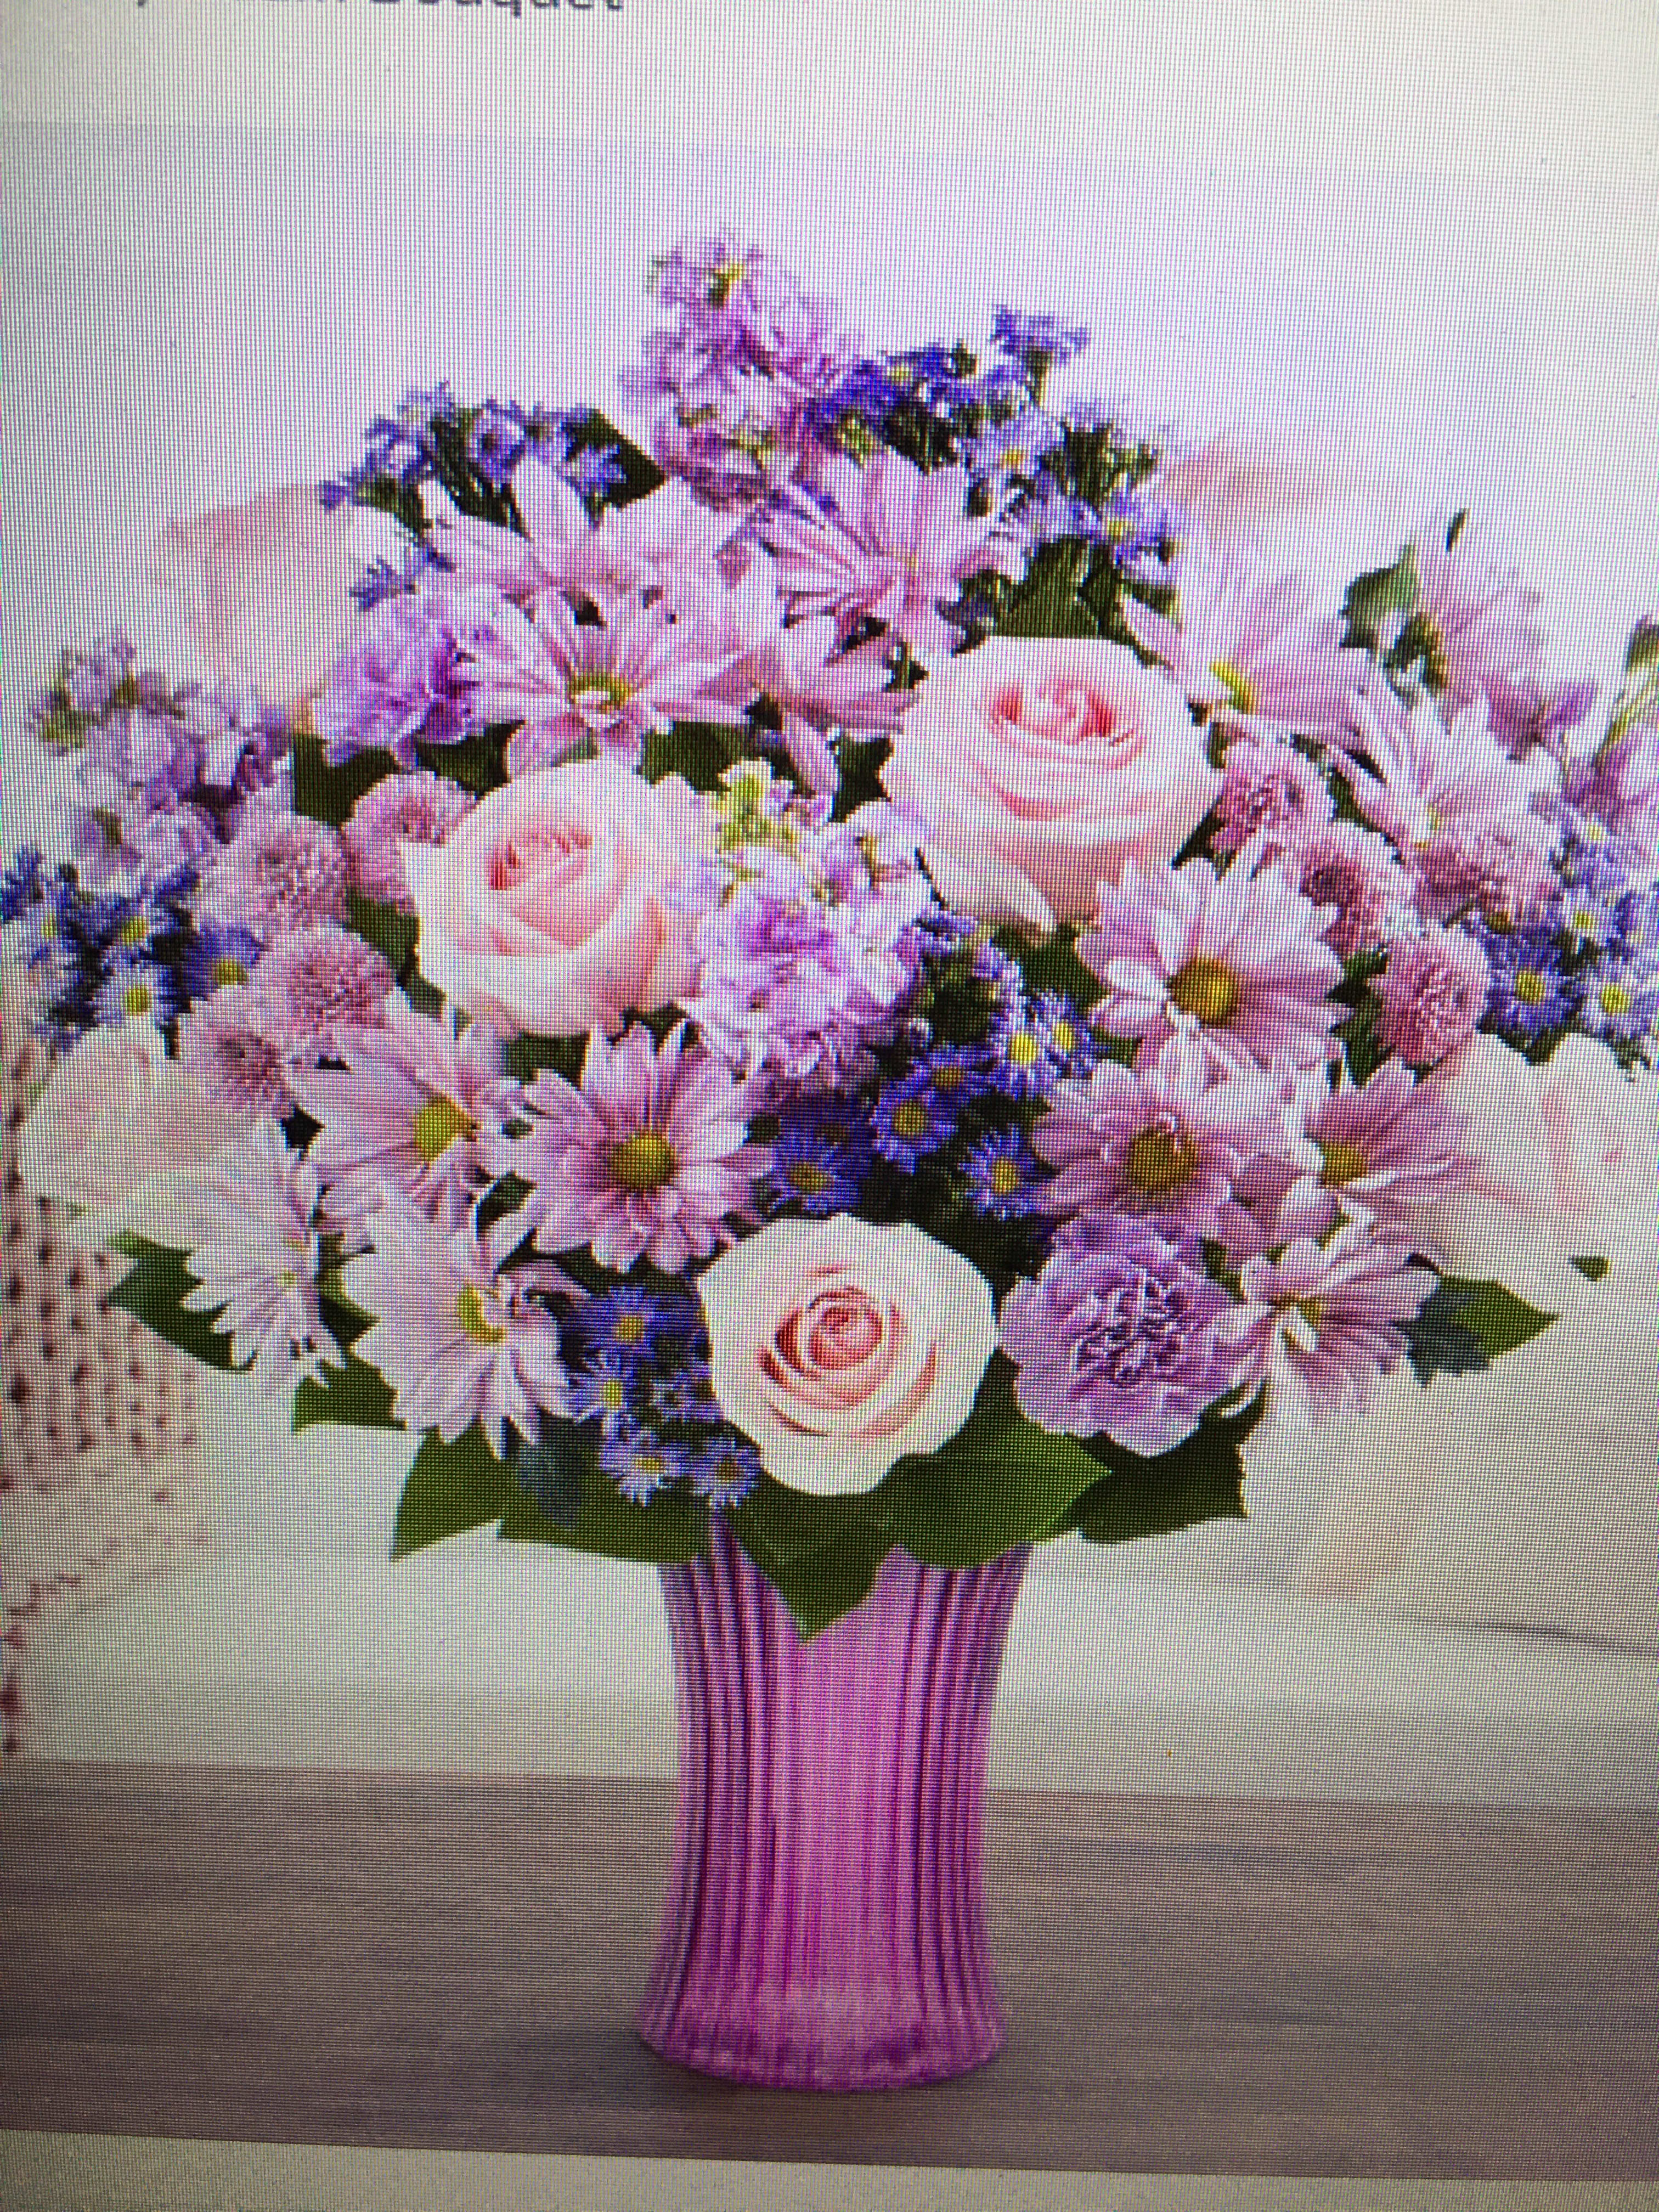 Daydream bouquet - Lilies carnations alstroemeria filler arranged in a purple vase